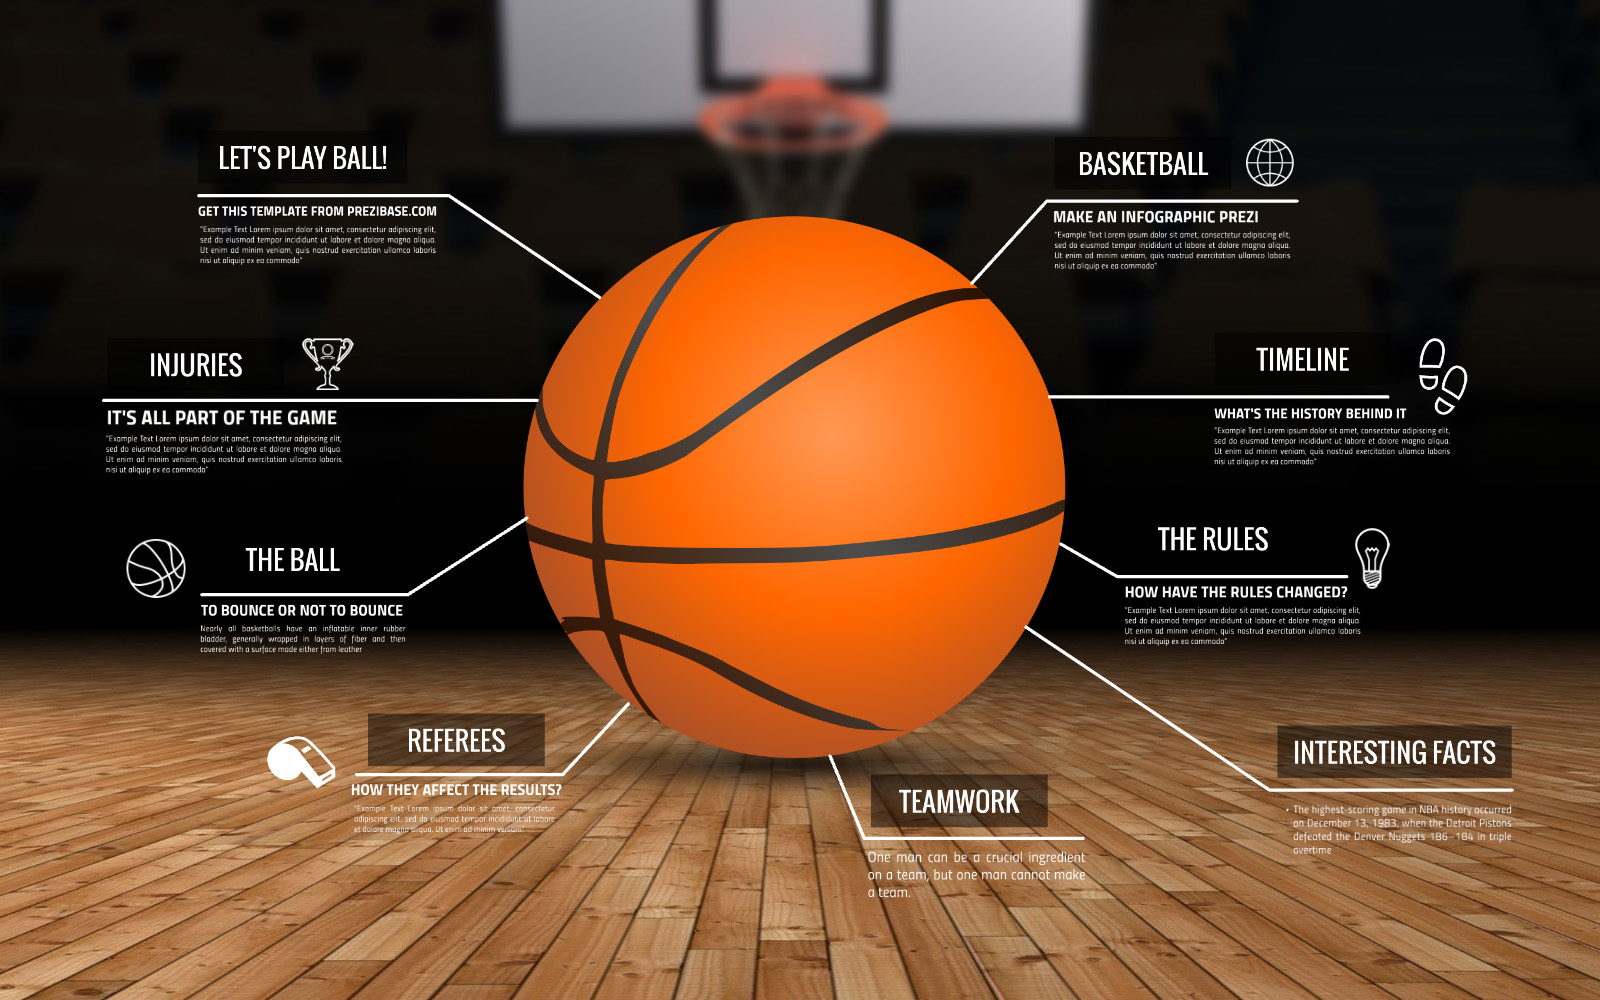 basketball-infographic-prezi-presentation-template-creatoz-collection